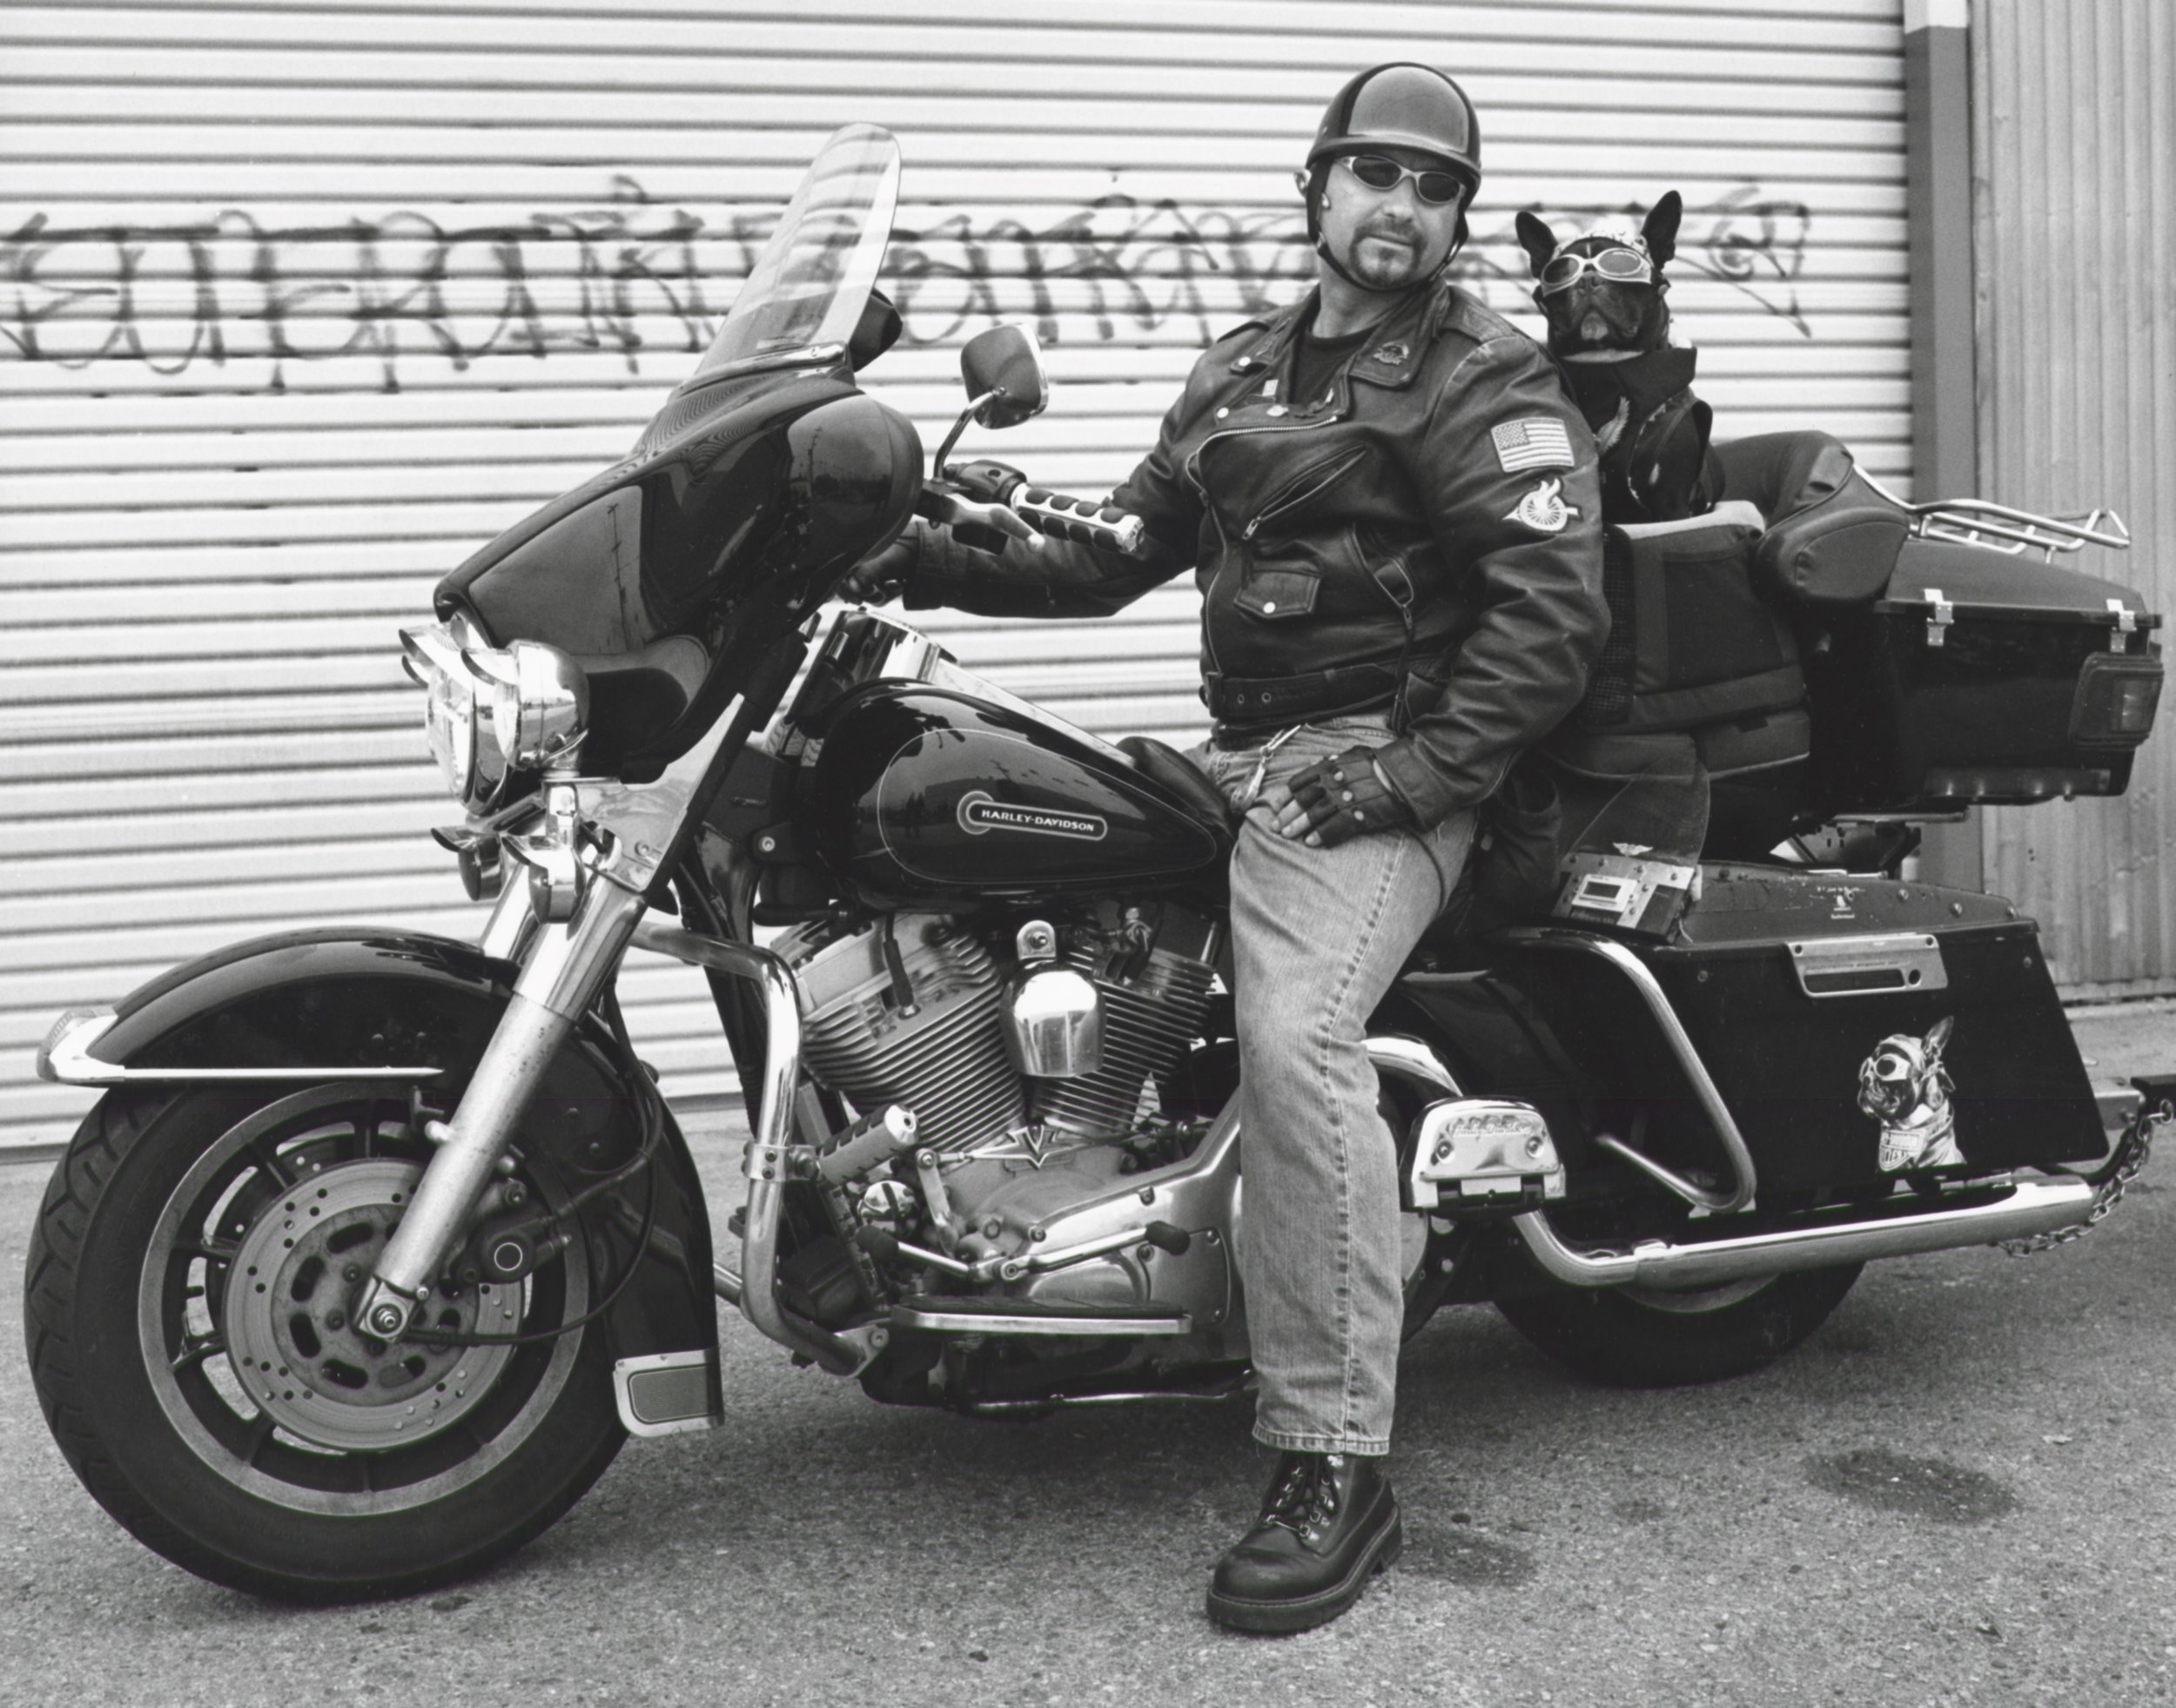 Harley Rider With Dog - Glendale CA 2002